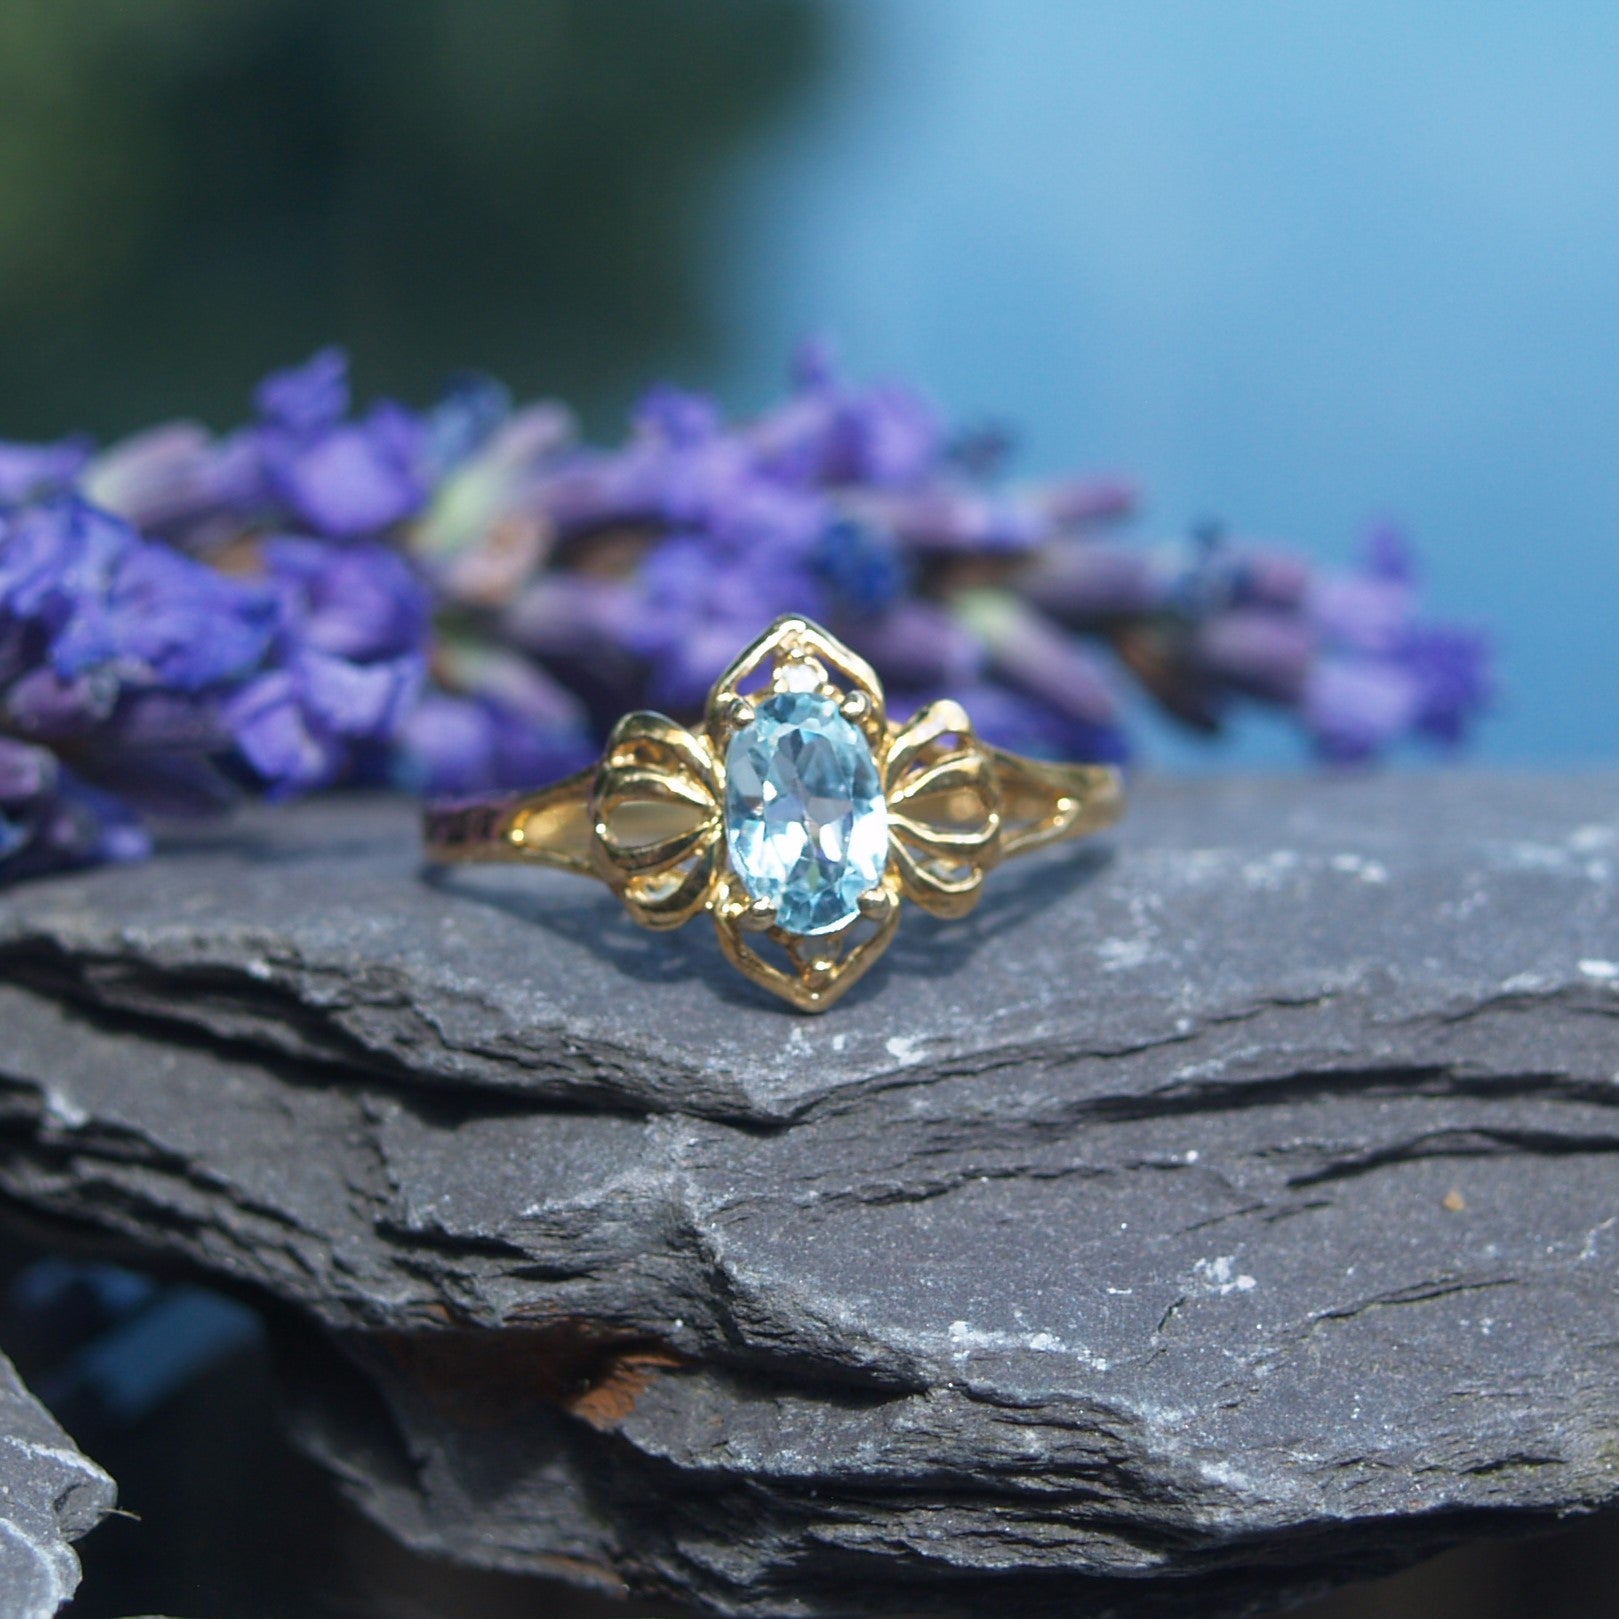 9ct Gold Aquamarine & Diamond Ring Size O 1/2 or 7 1/2 US.